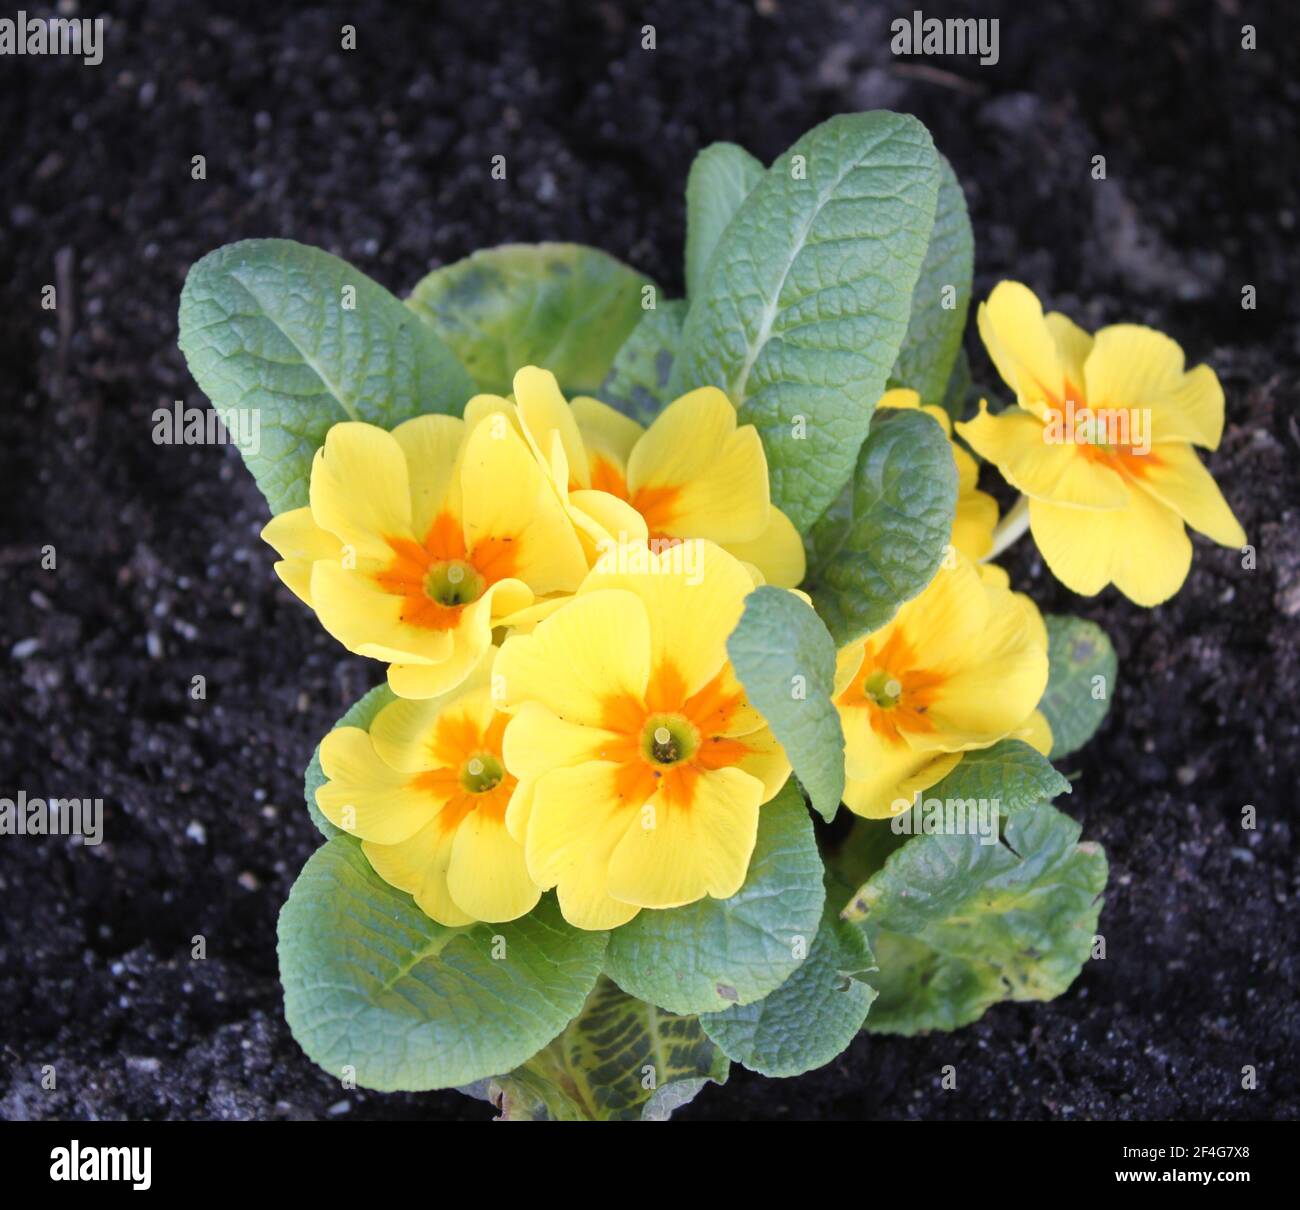 Yellow primroses (primulas). Spring flowers, vibrant colours found in Spring gardens. Celebrate flowers and celebrate spring. Seasons and rebirth. Stock Photo